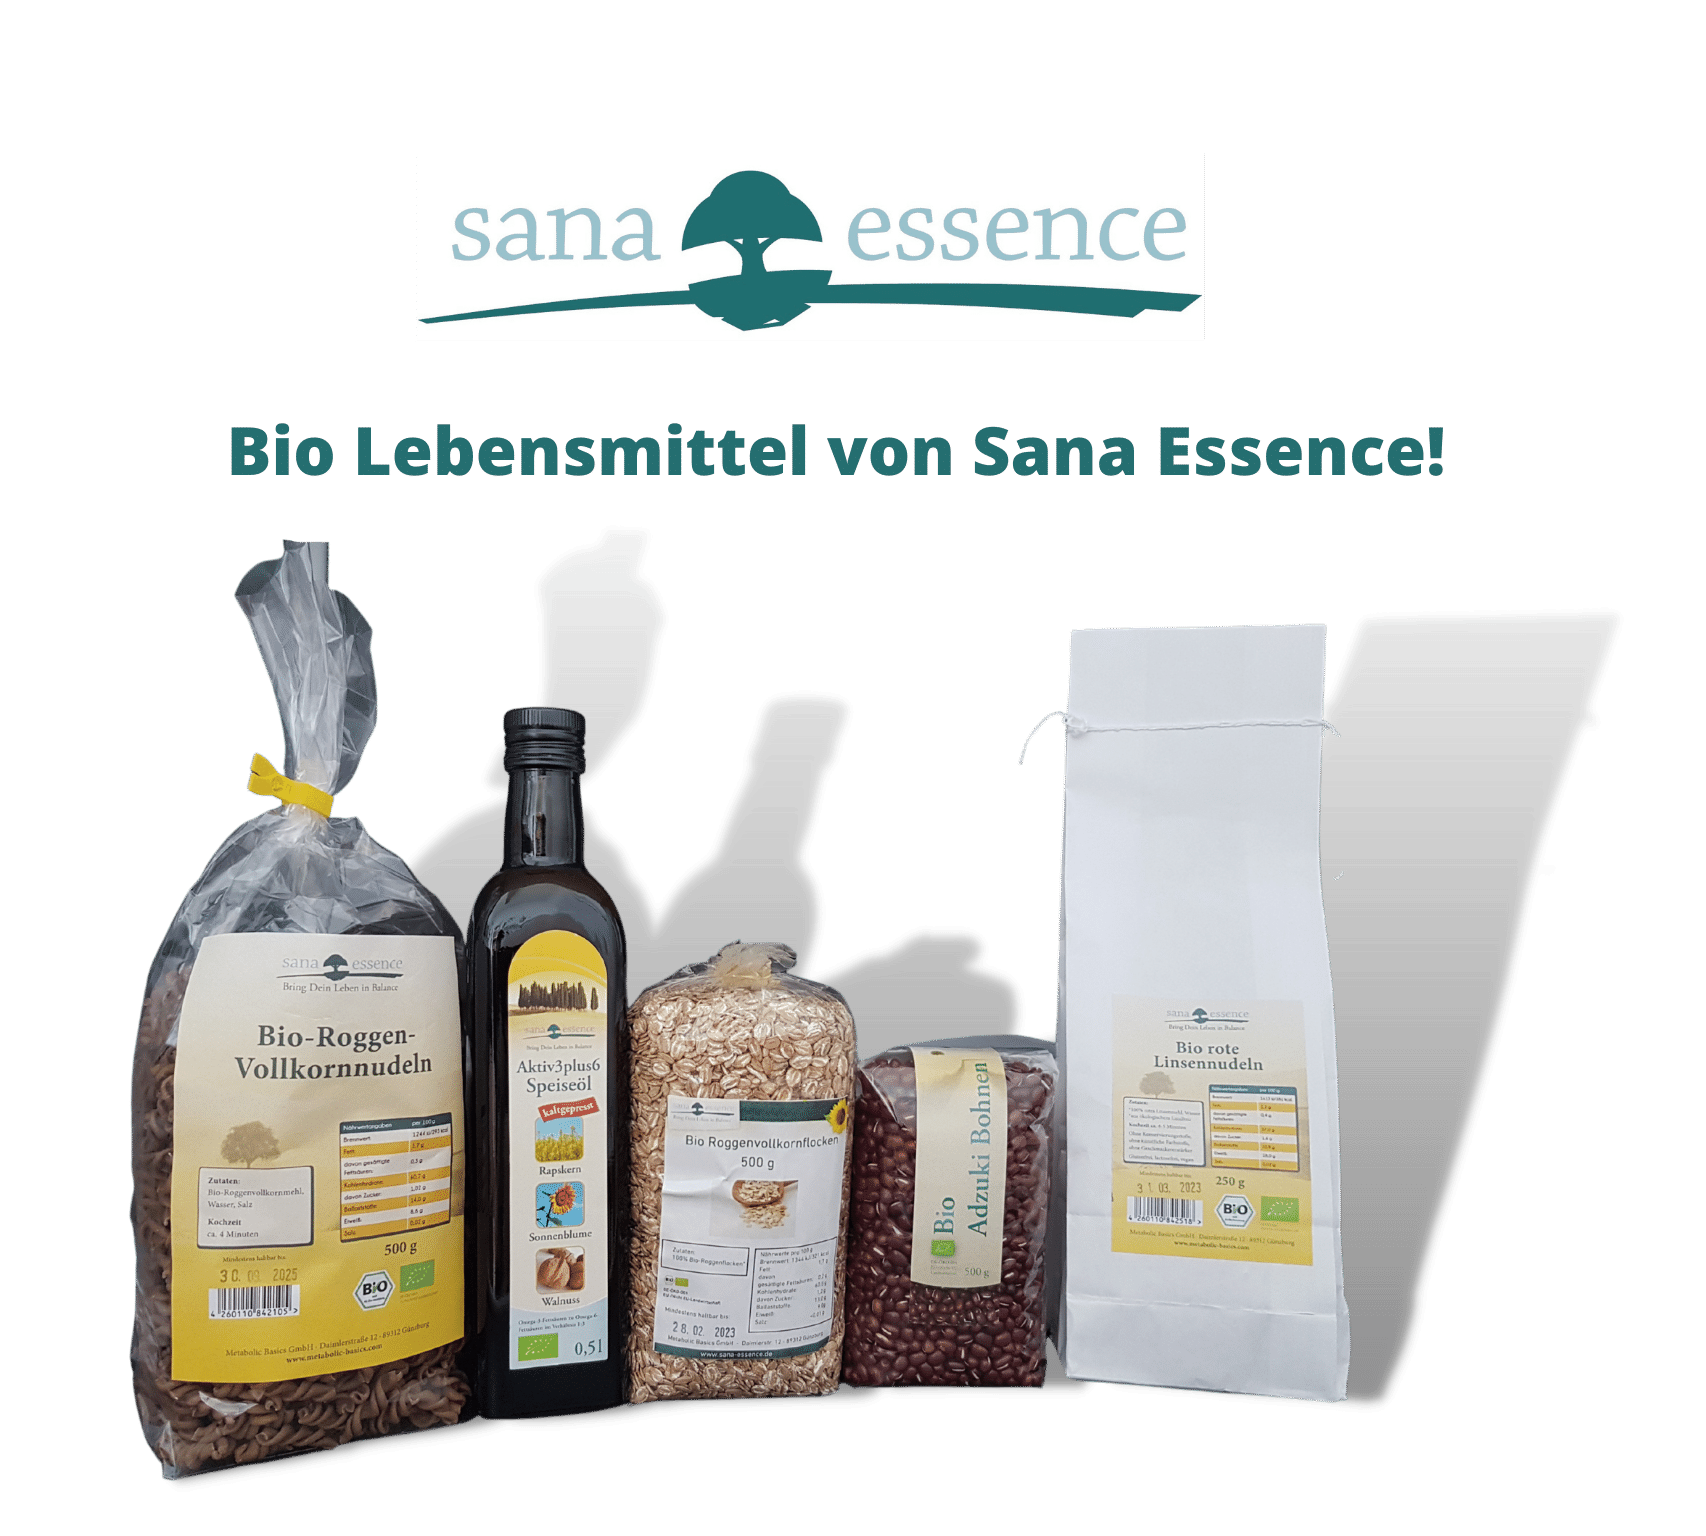 No 3 Bio Lebensmittel von Sana Essence!